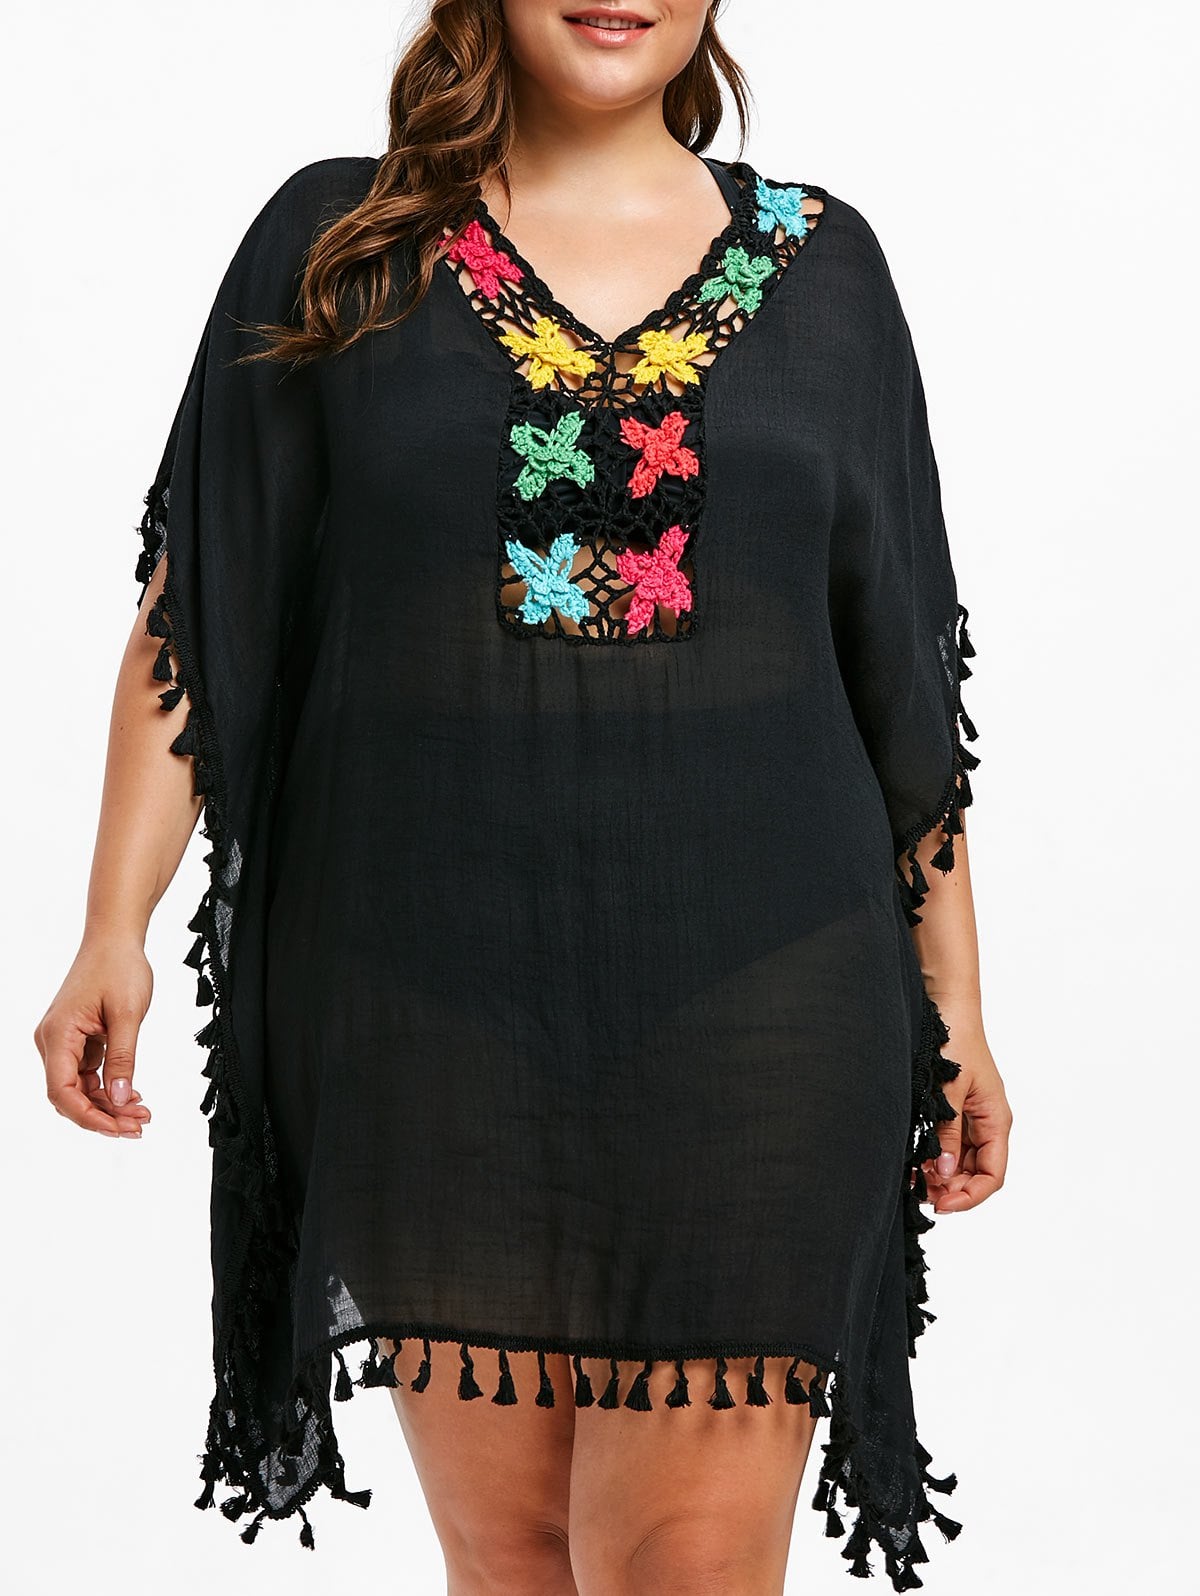 Tassel Plus Size Crochet Cover Up Dress